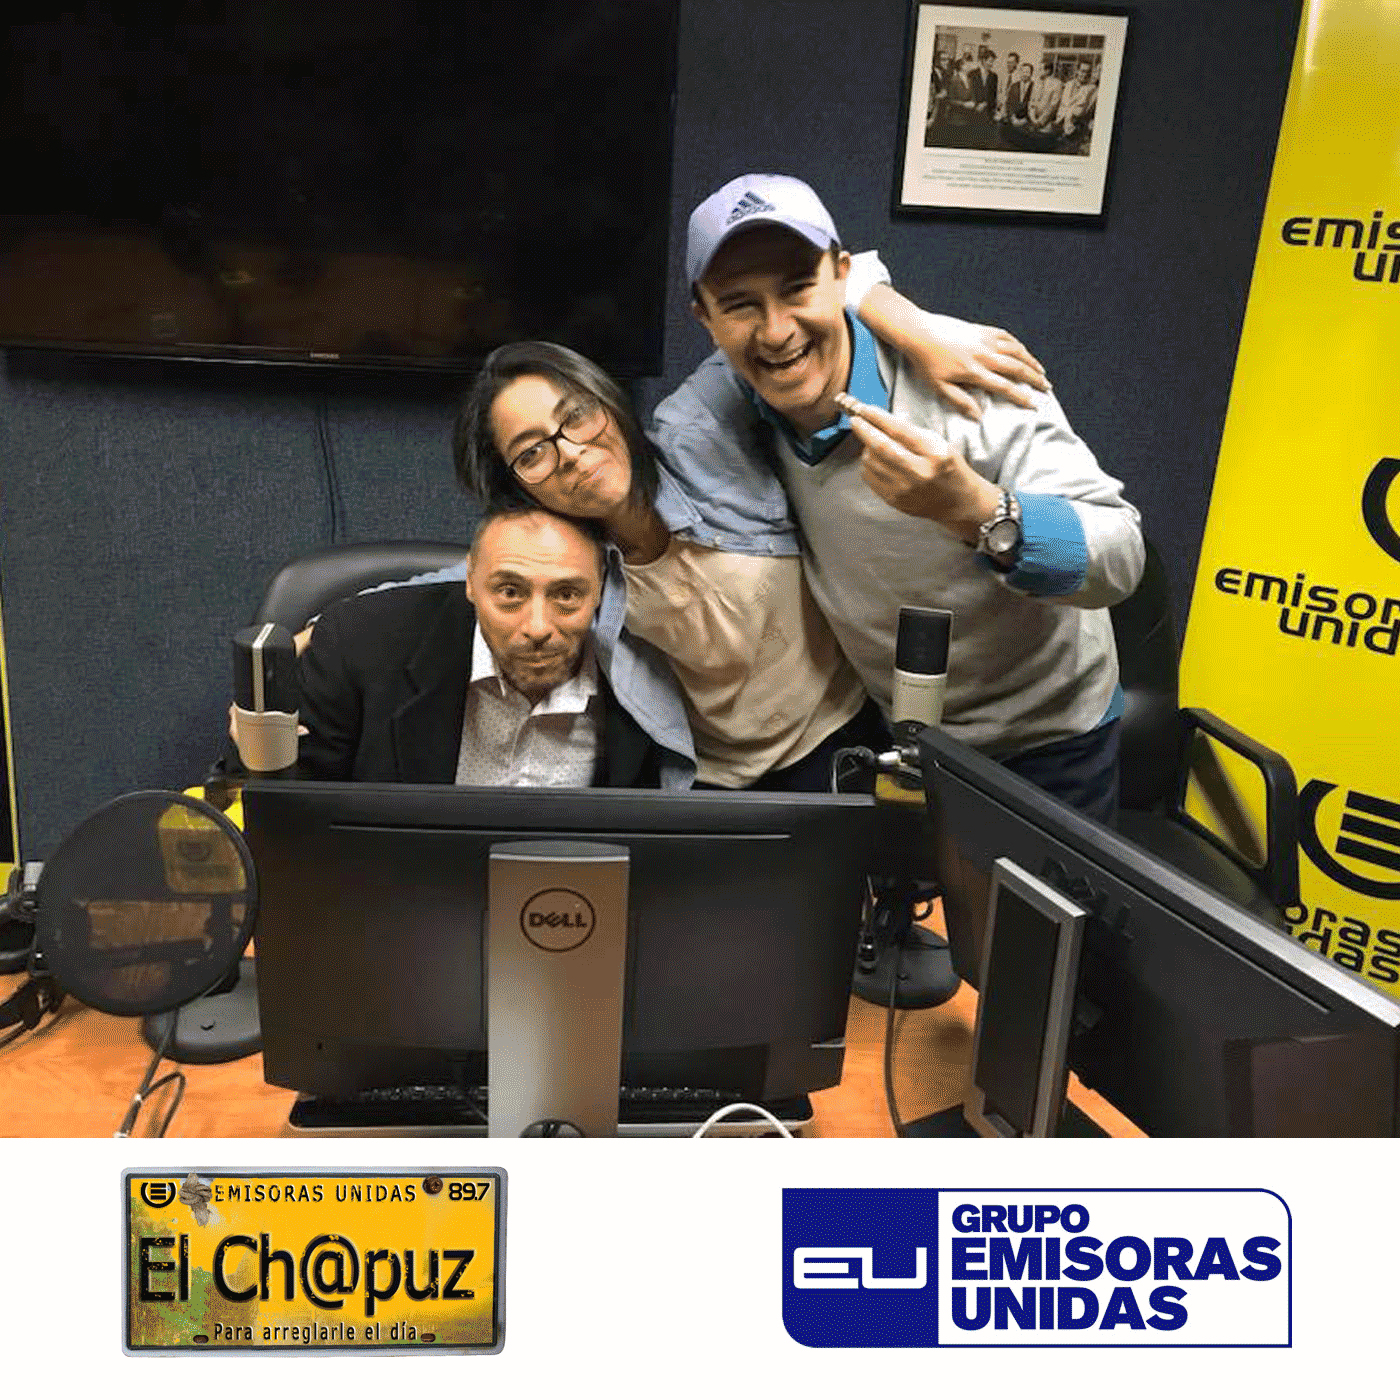 EC024 - El Chapuz - Emisoras unidas - #FamaDelOficio